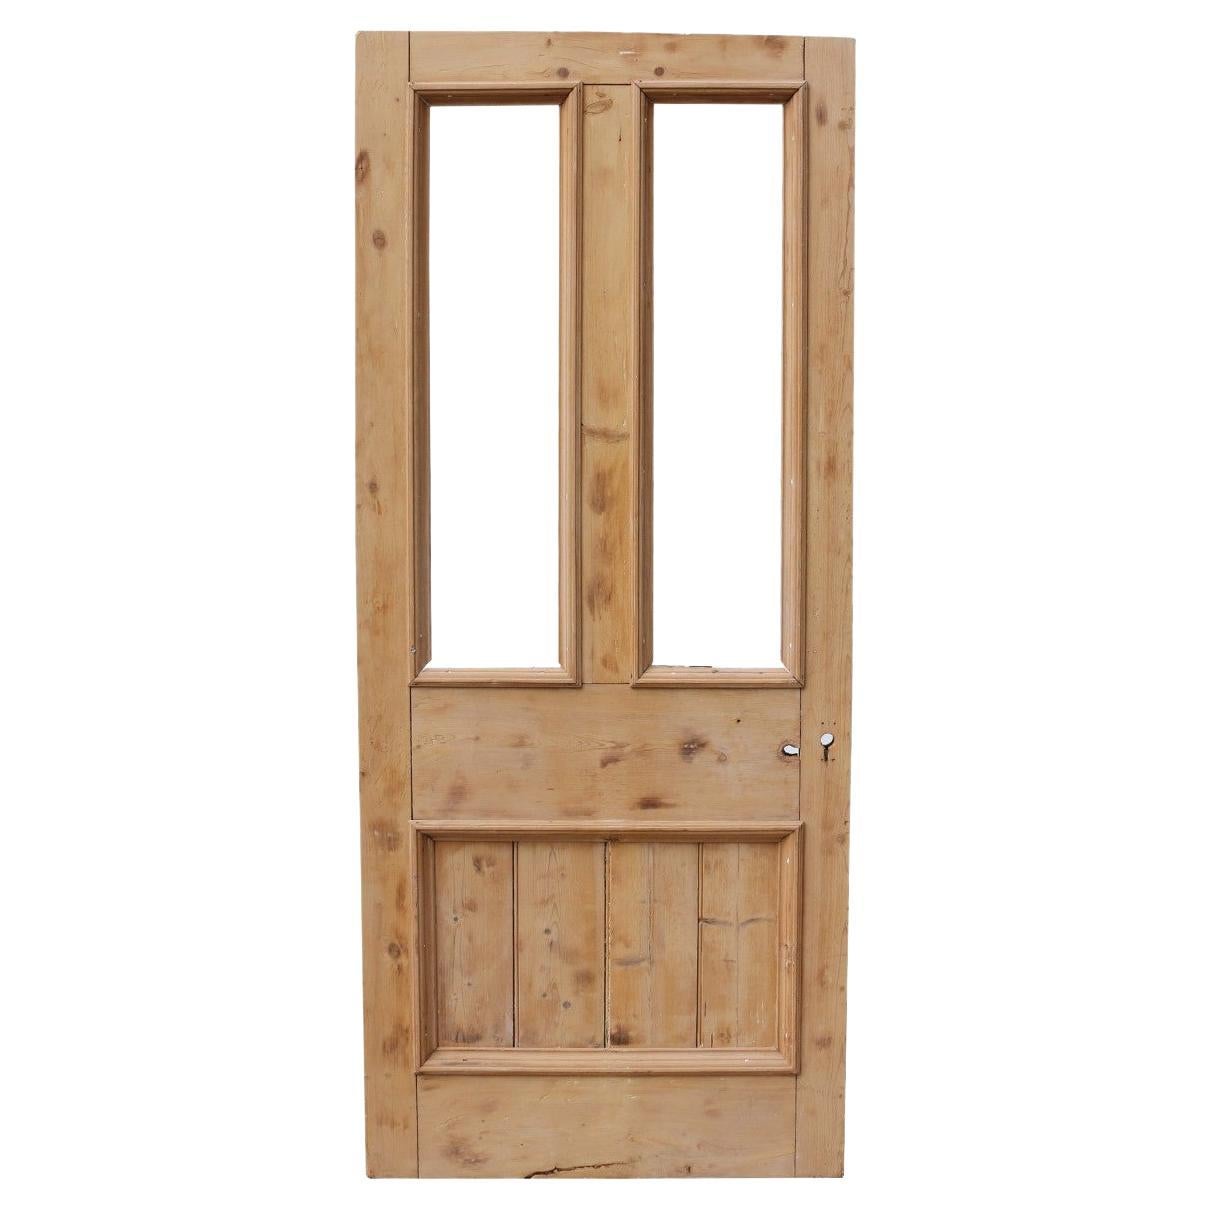 Antique Stripped Pine Door For Sale